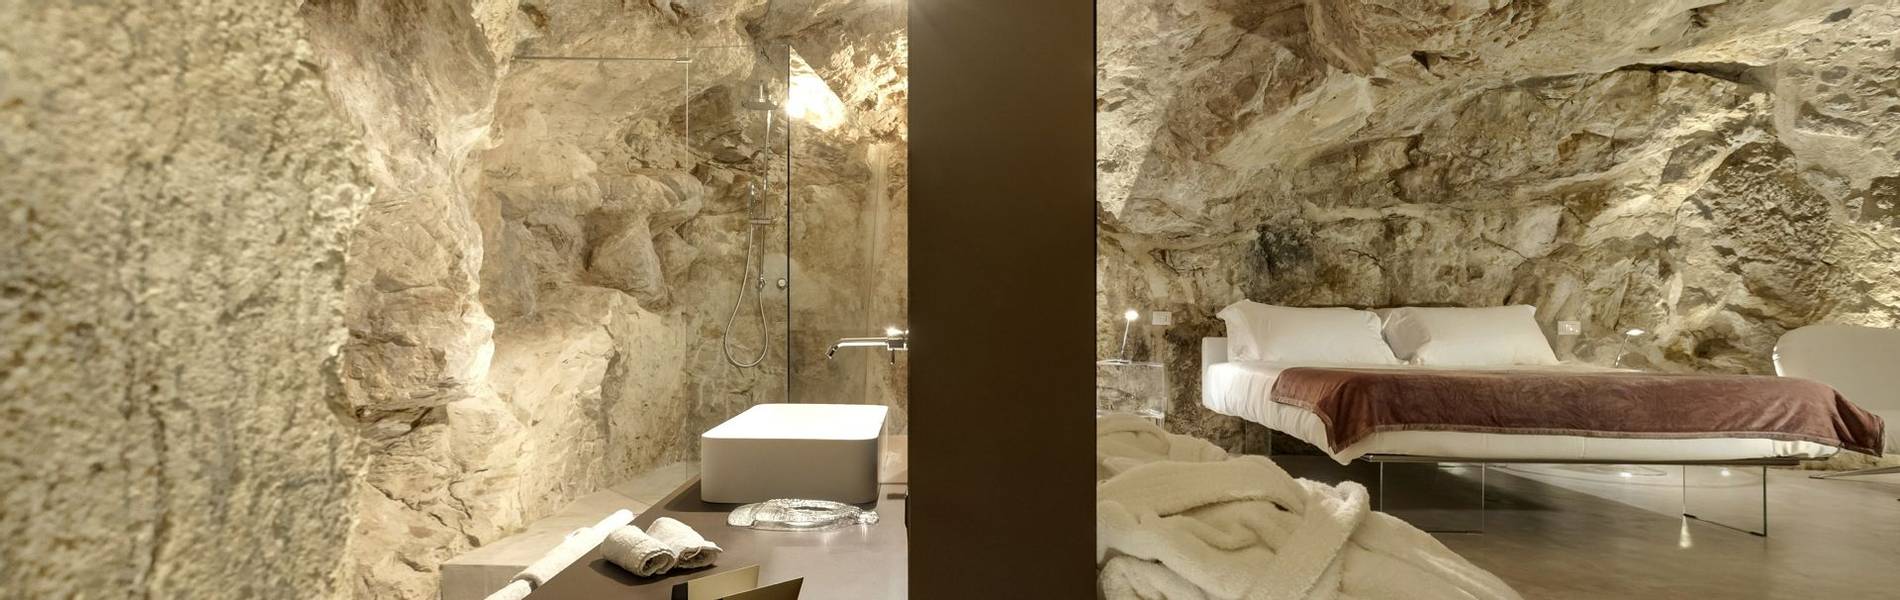 Locanda Don Serafino, Sicily, Italy, Luxury Suite (12).jpg